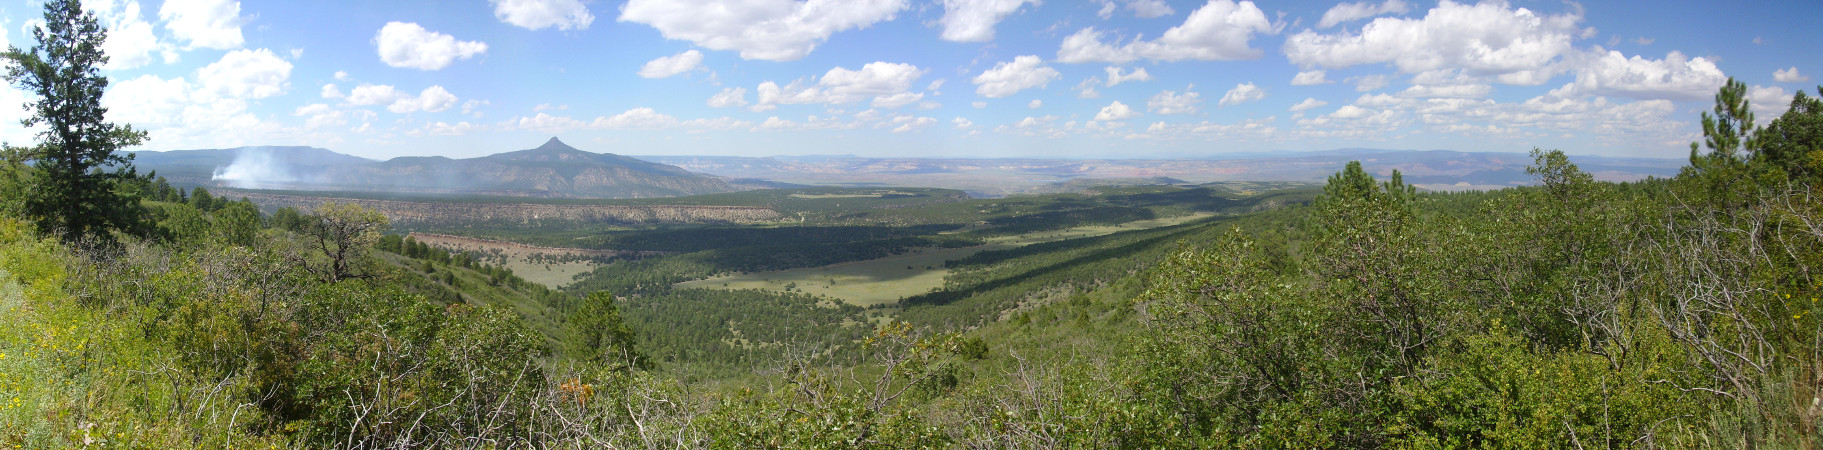 Panorama from north flank of Cerro Pelon